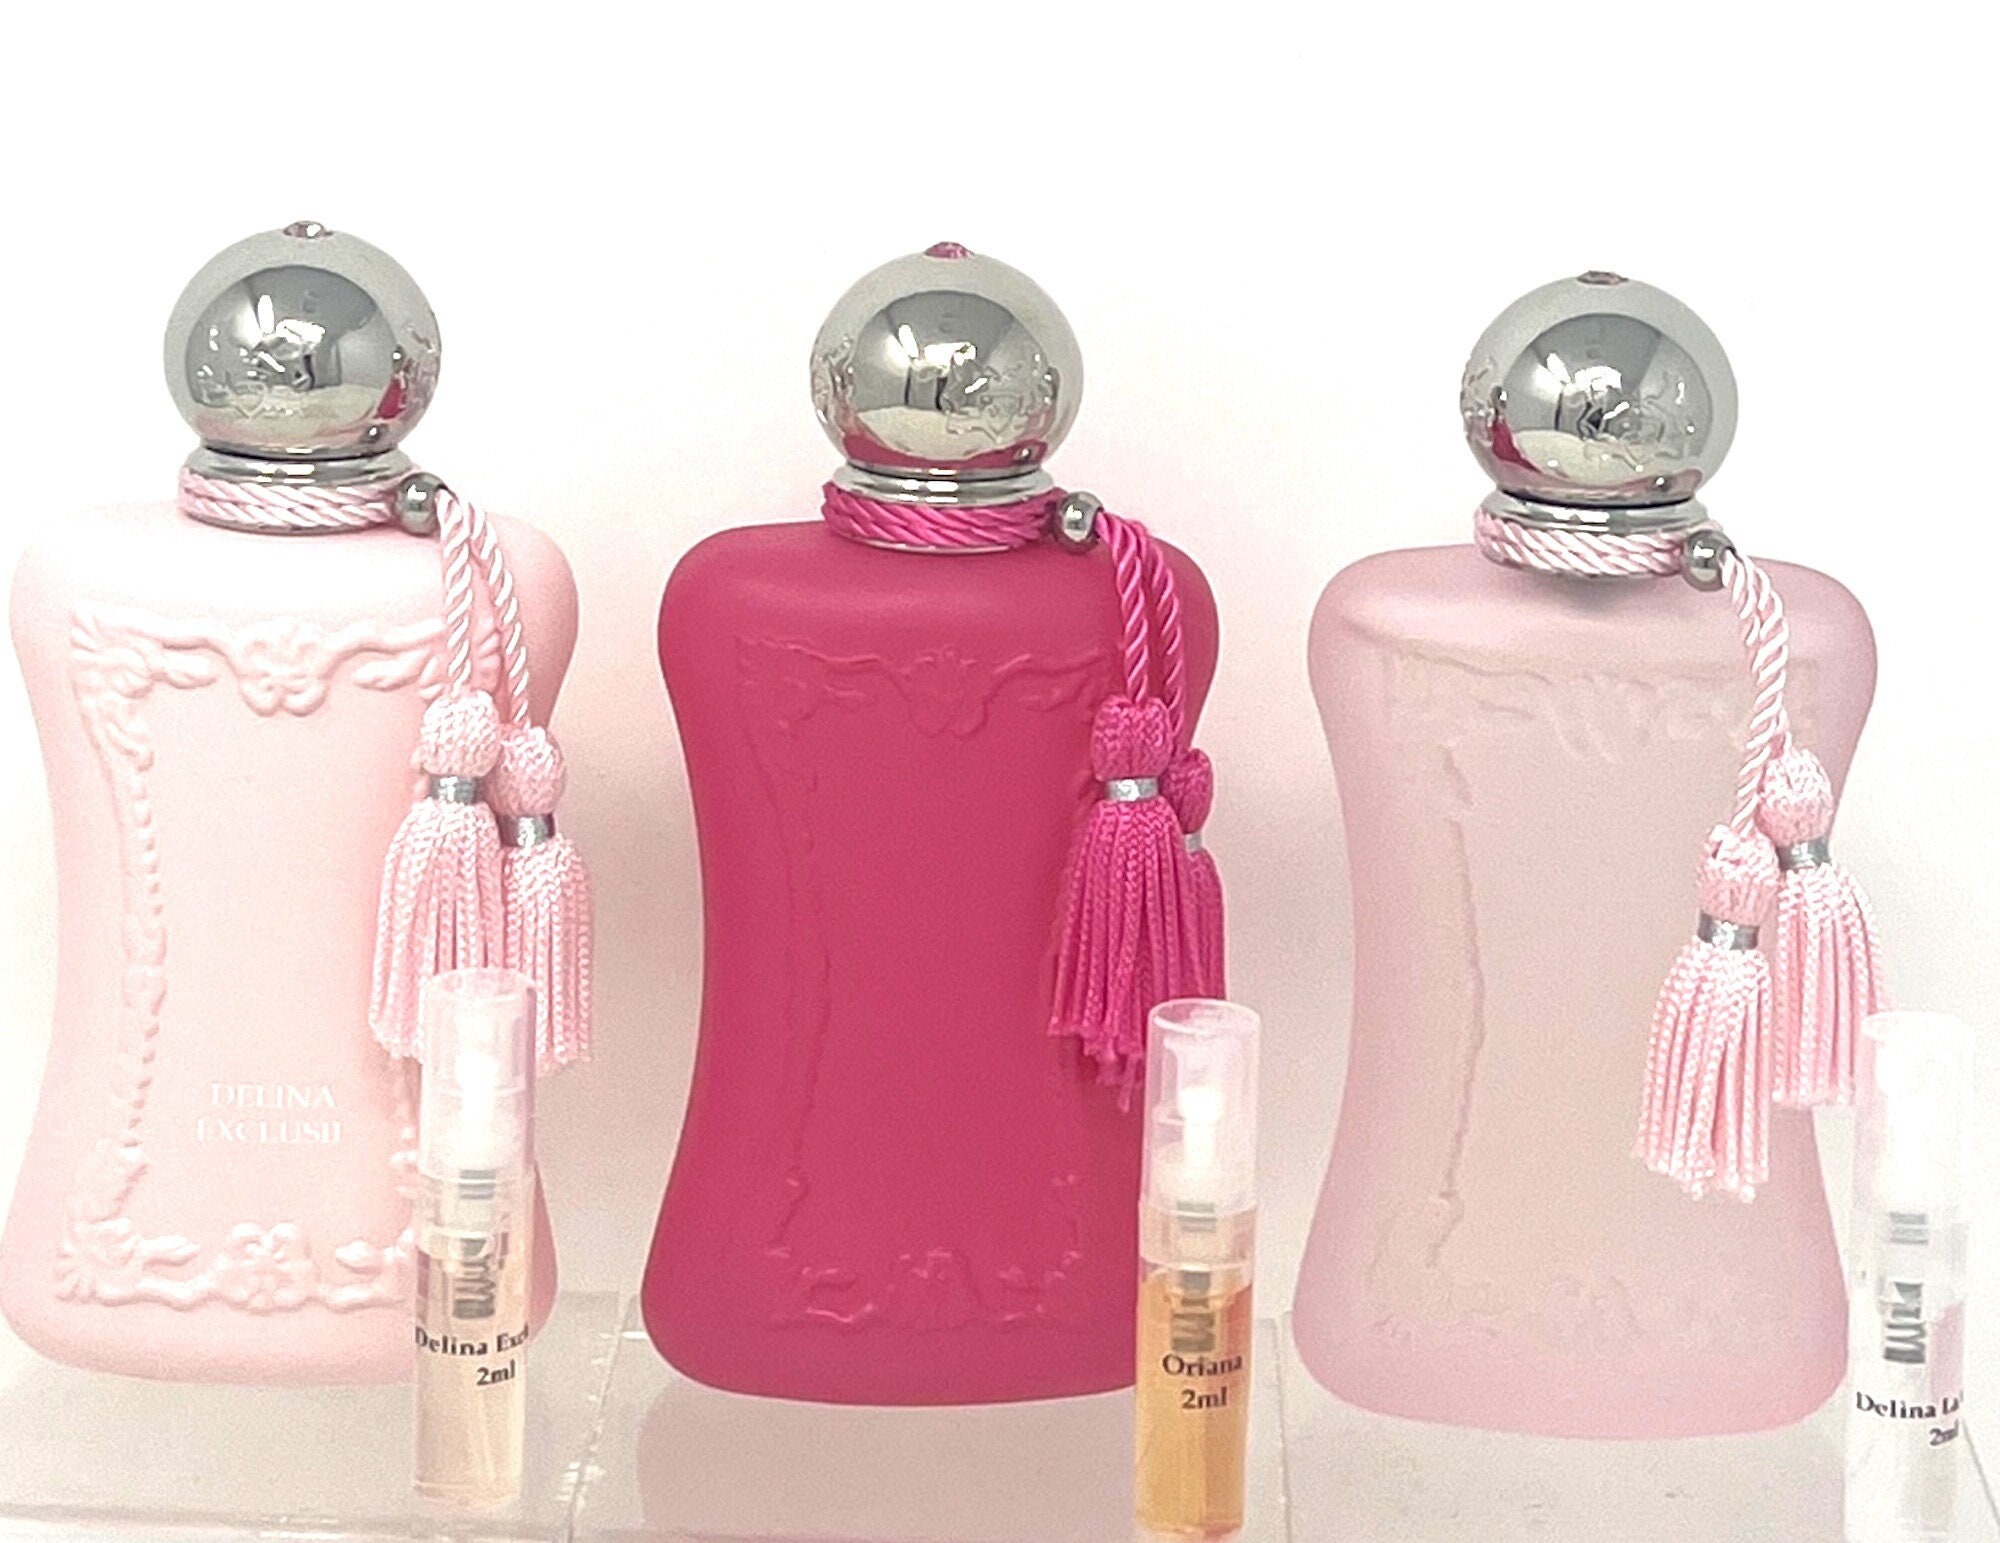 2ml perfume set